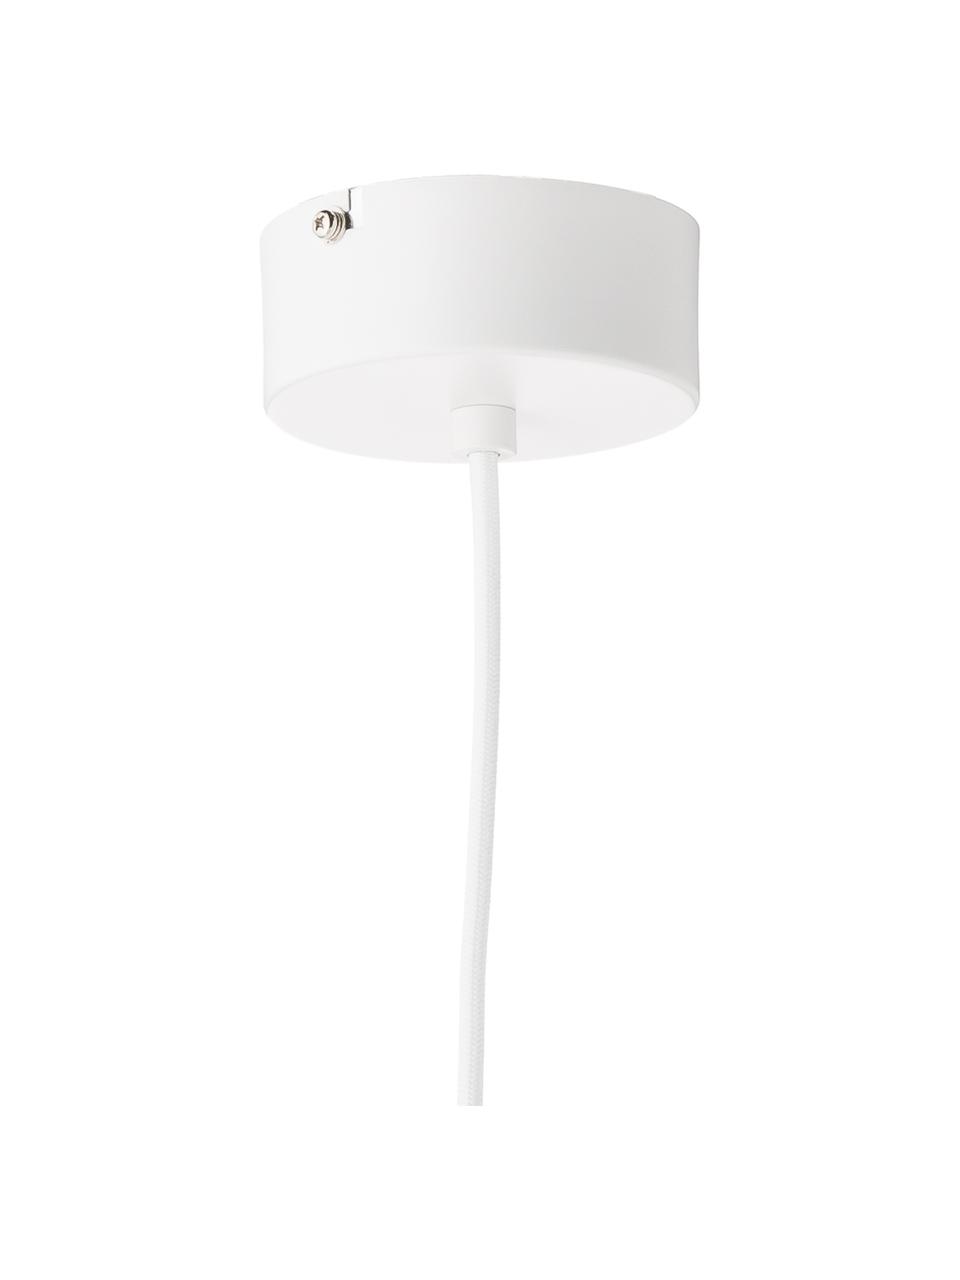 Petite suspension LED Swing, Blanc, crème